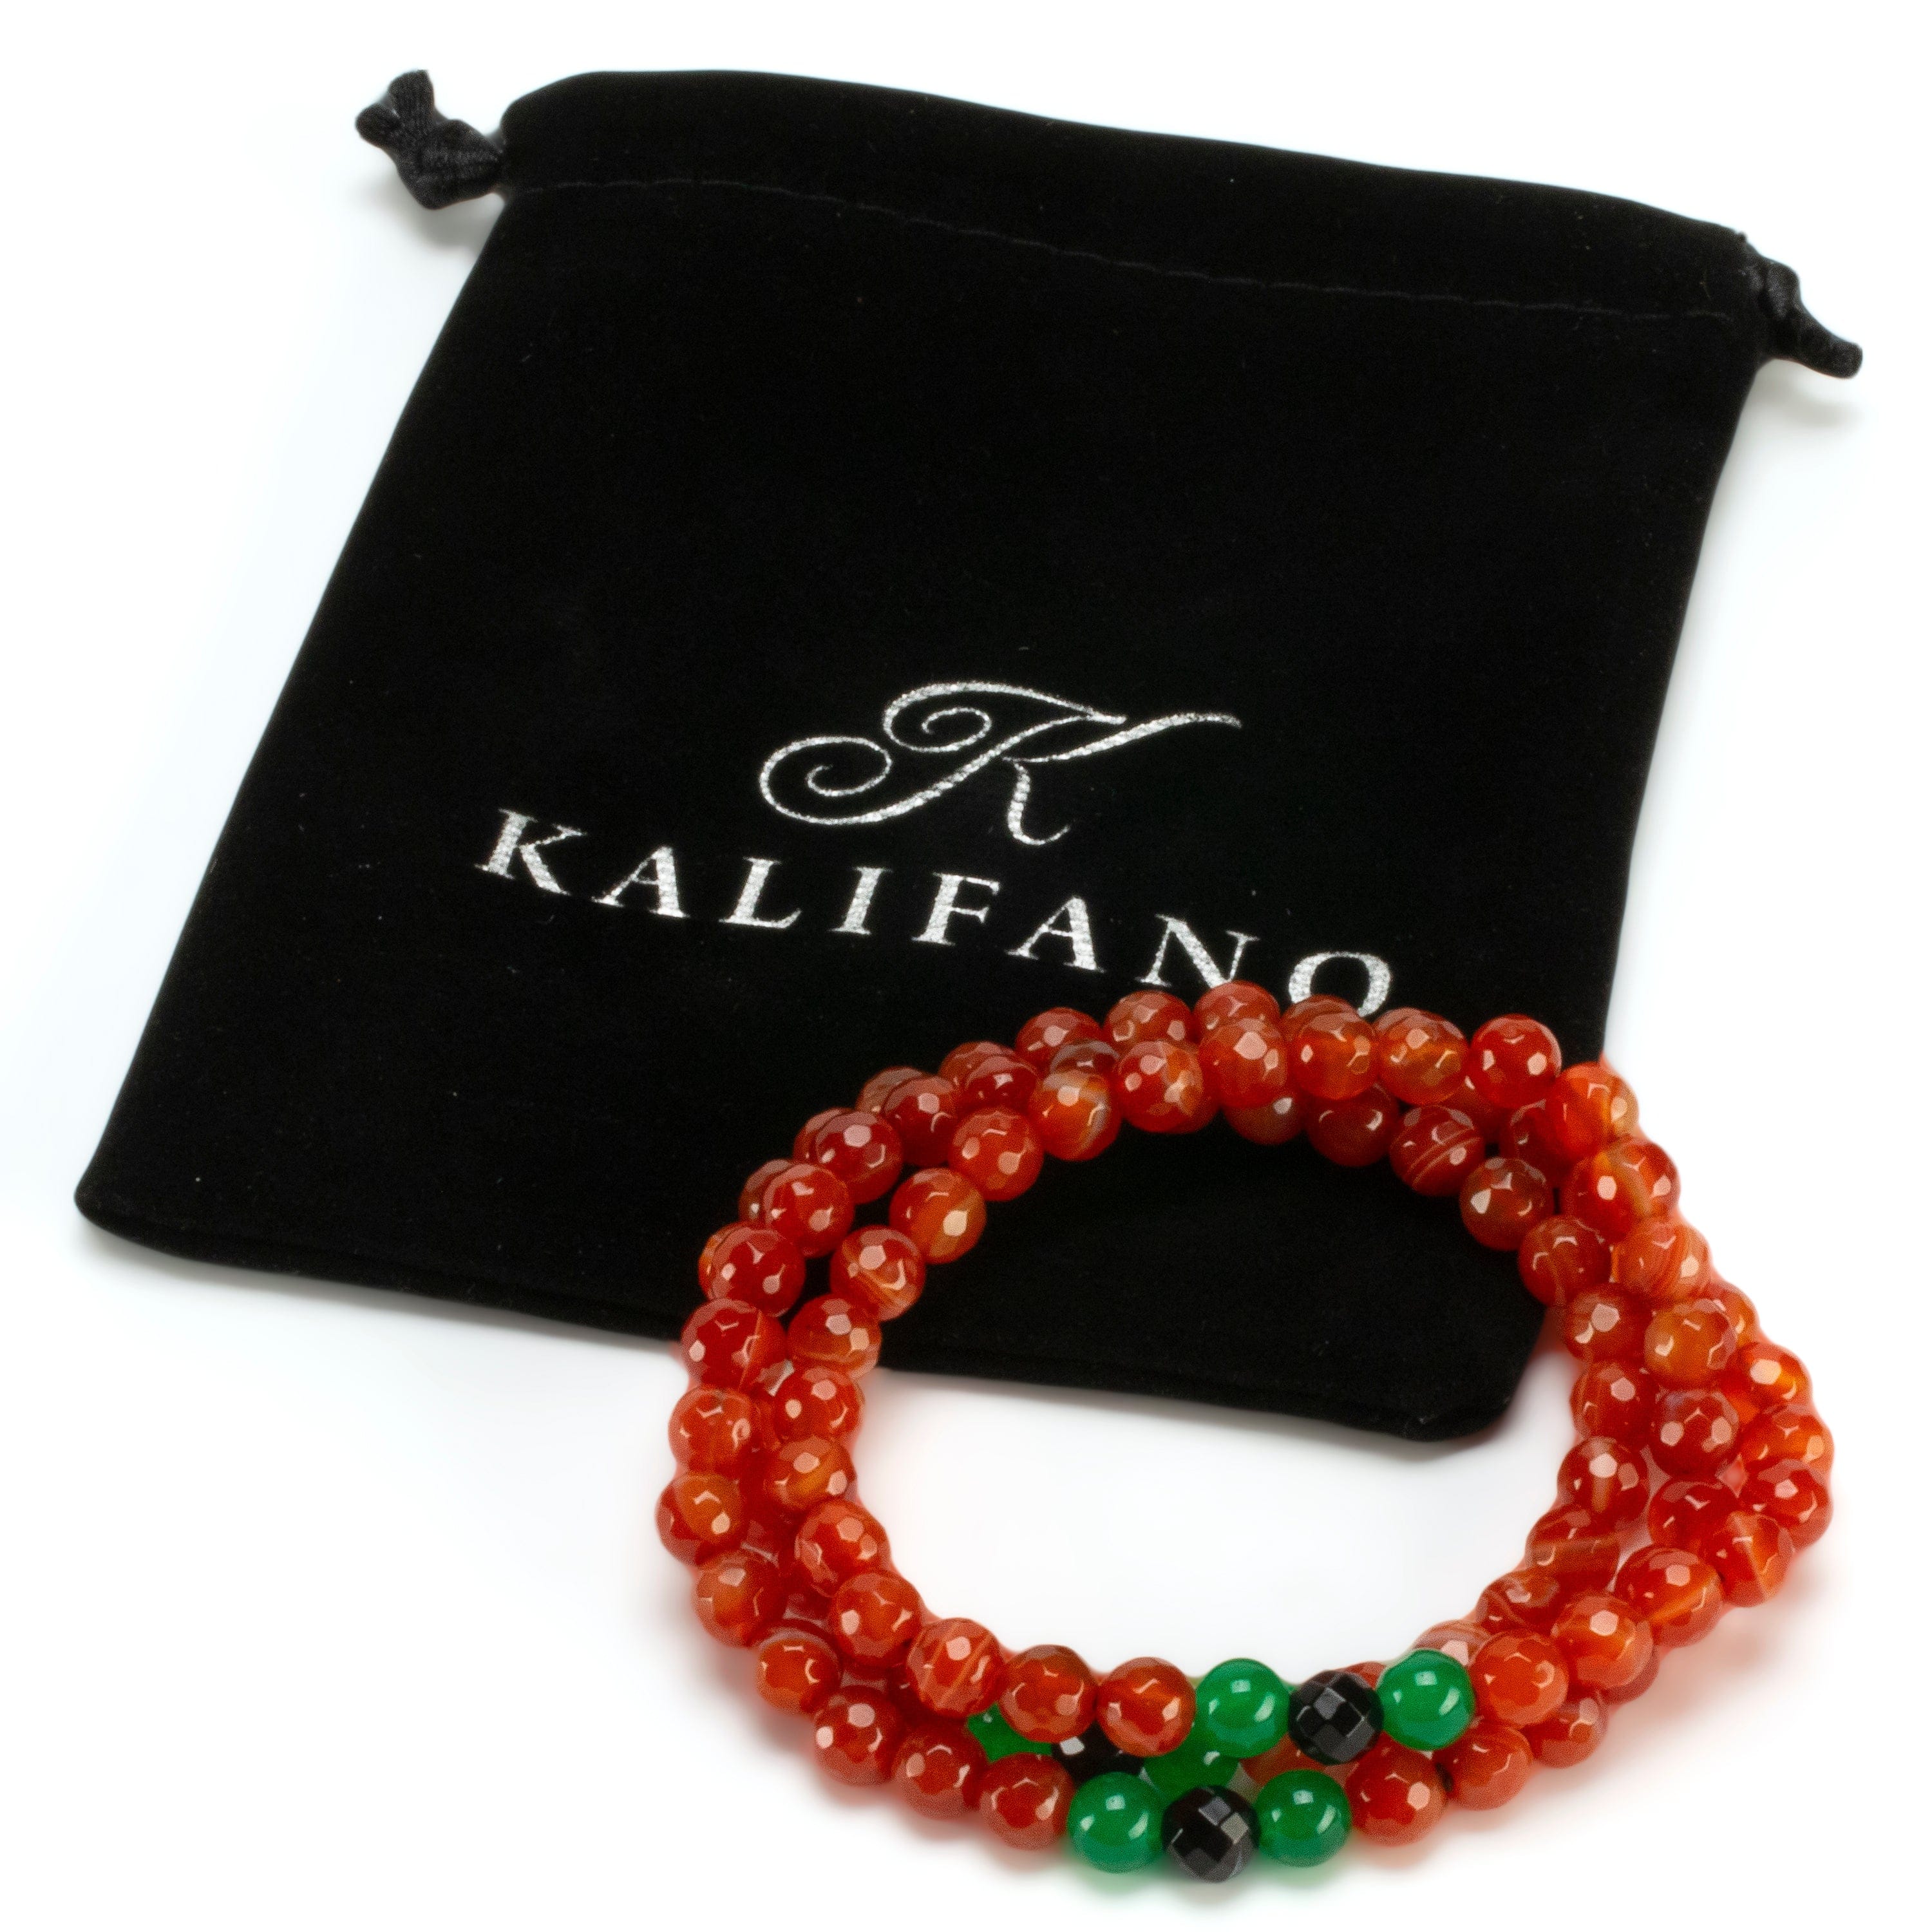 Kalifano Gemstone Bracelets Carnelian 6mm Faceted Beads with Aventurine & Black Agate Accents Triple Wrap Gemstone Bead Elastic Bracelet WHITE-BGI3-073